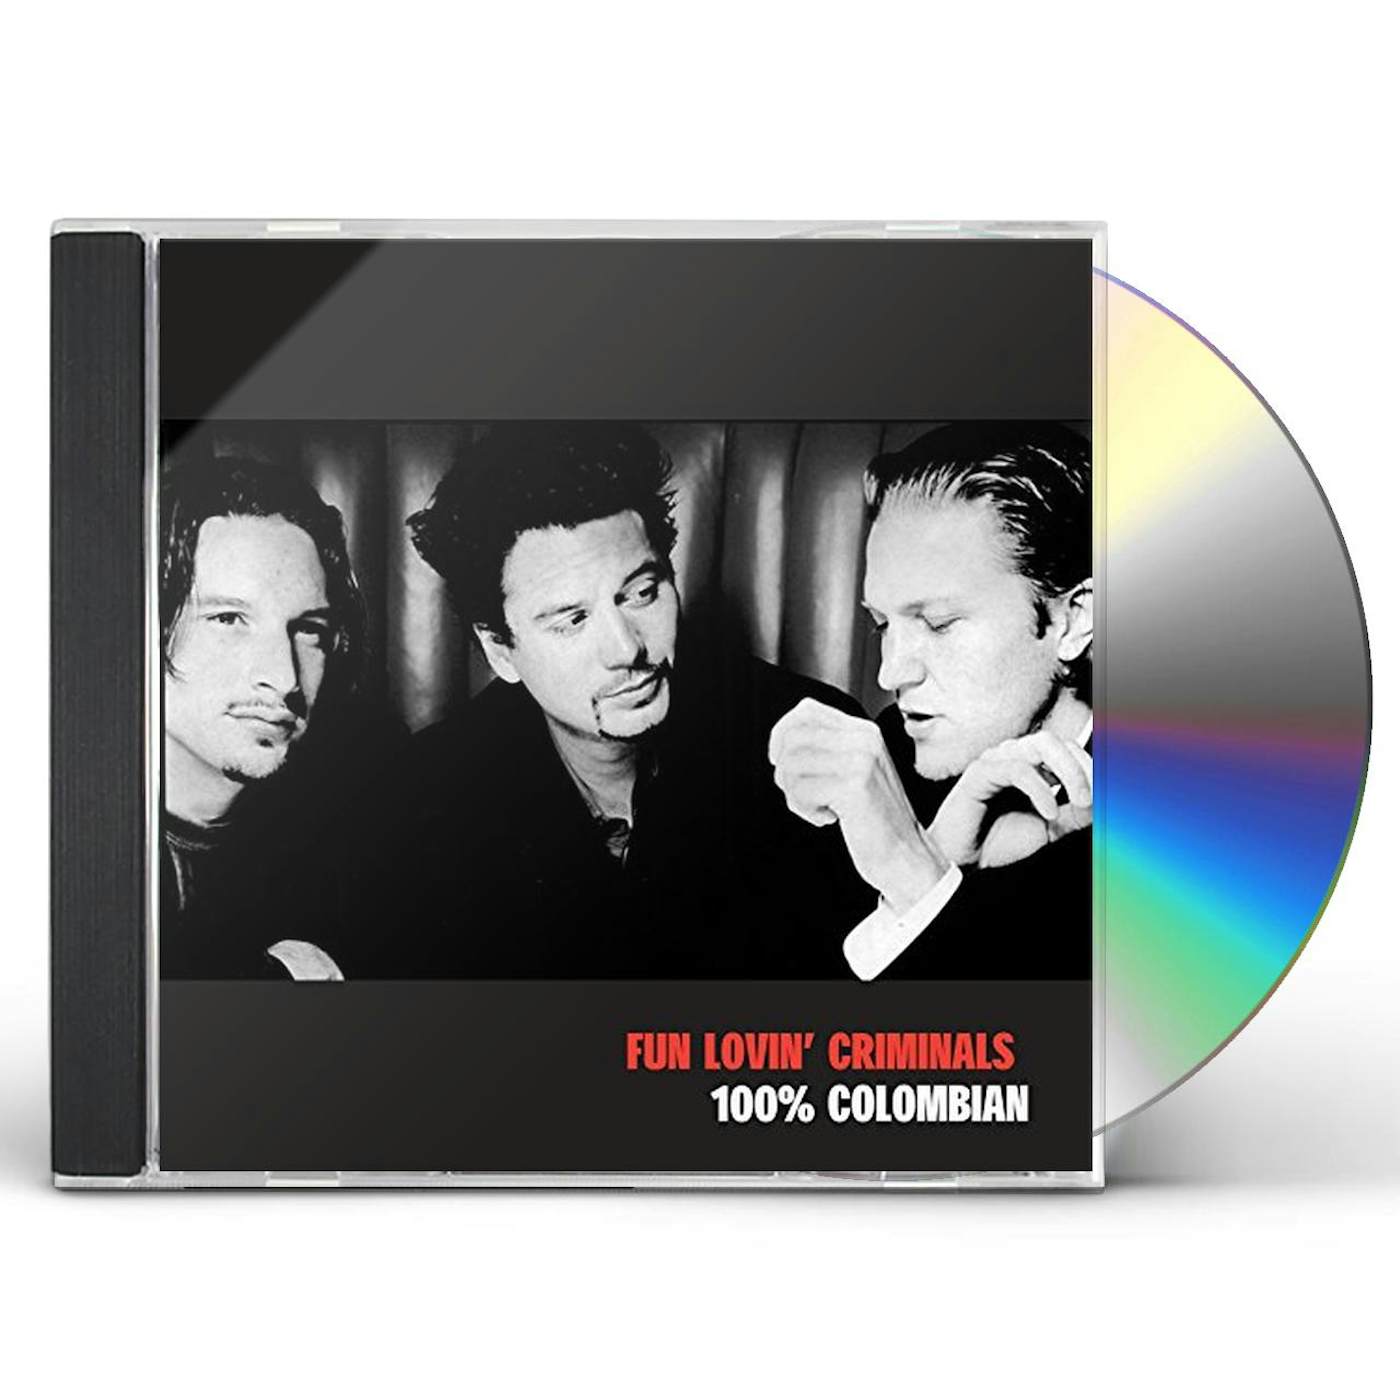 Fun Lovin' Criminals 100% COLOMBIAN CD